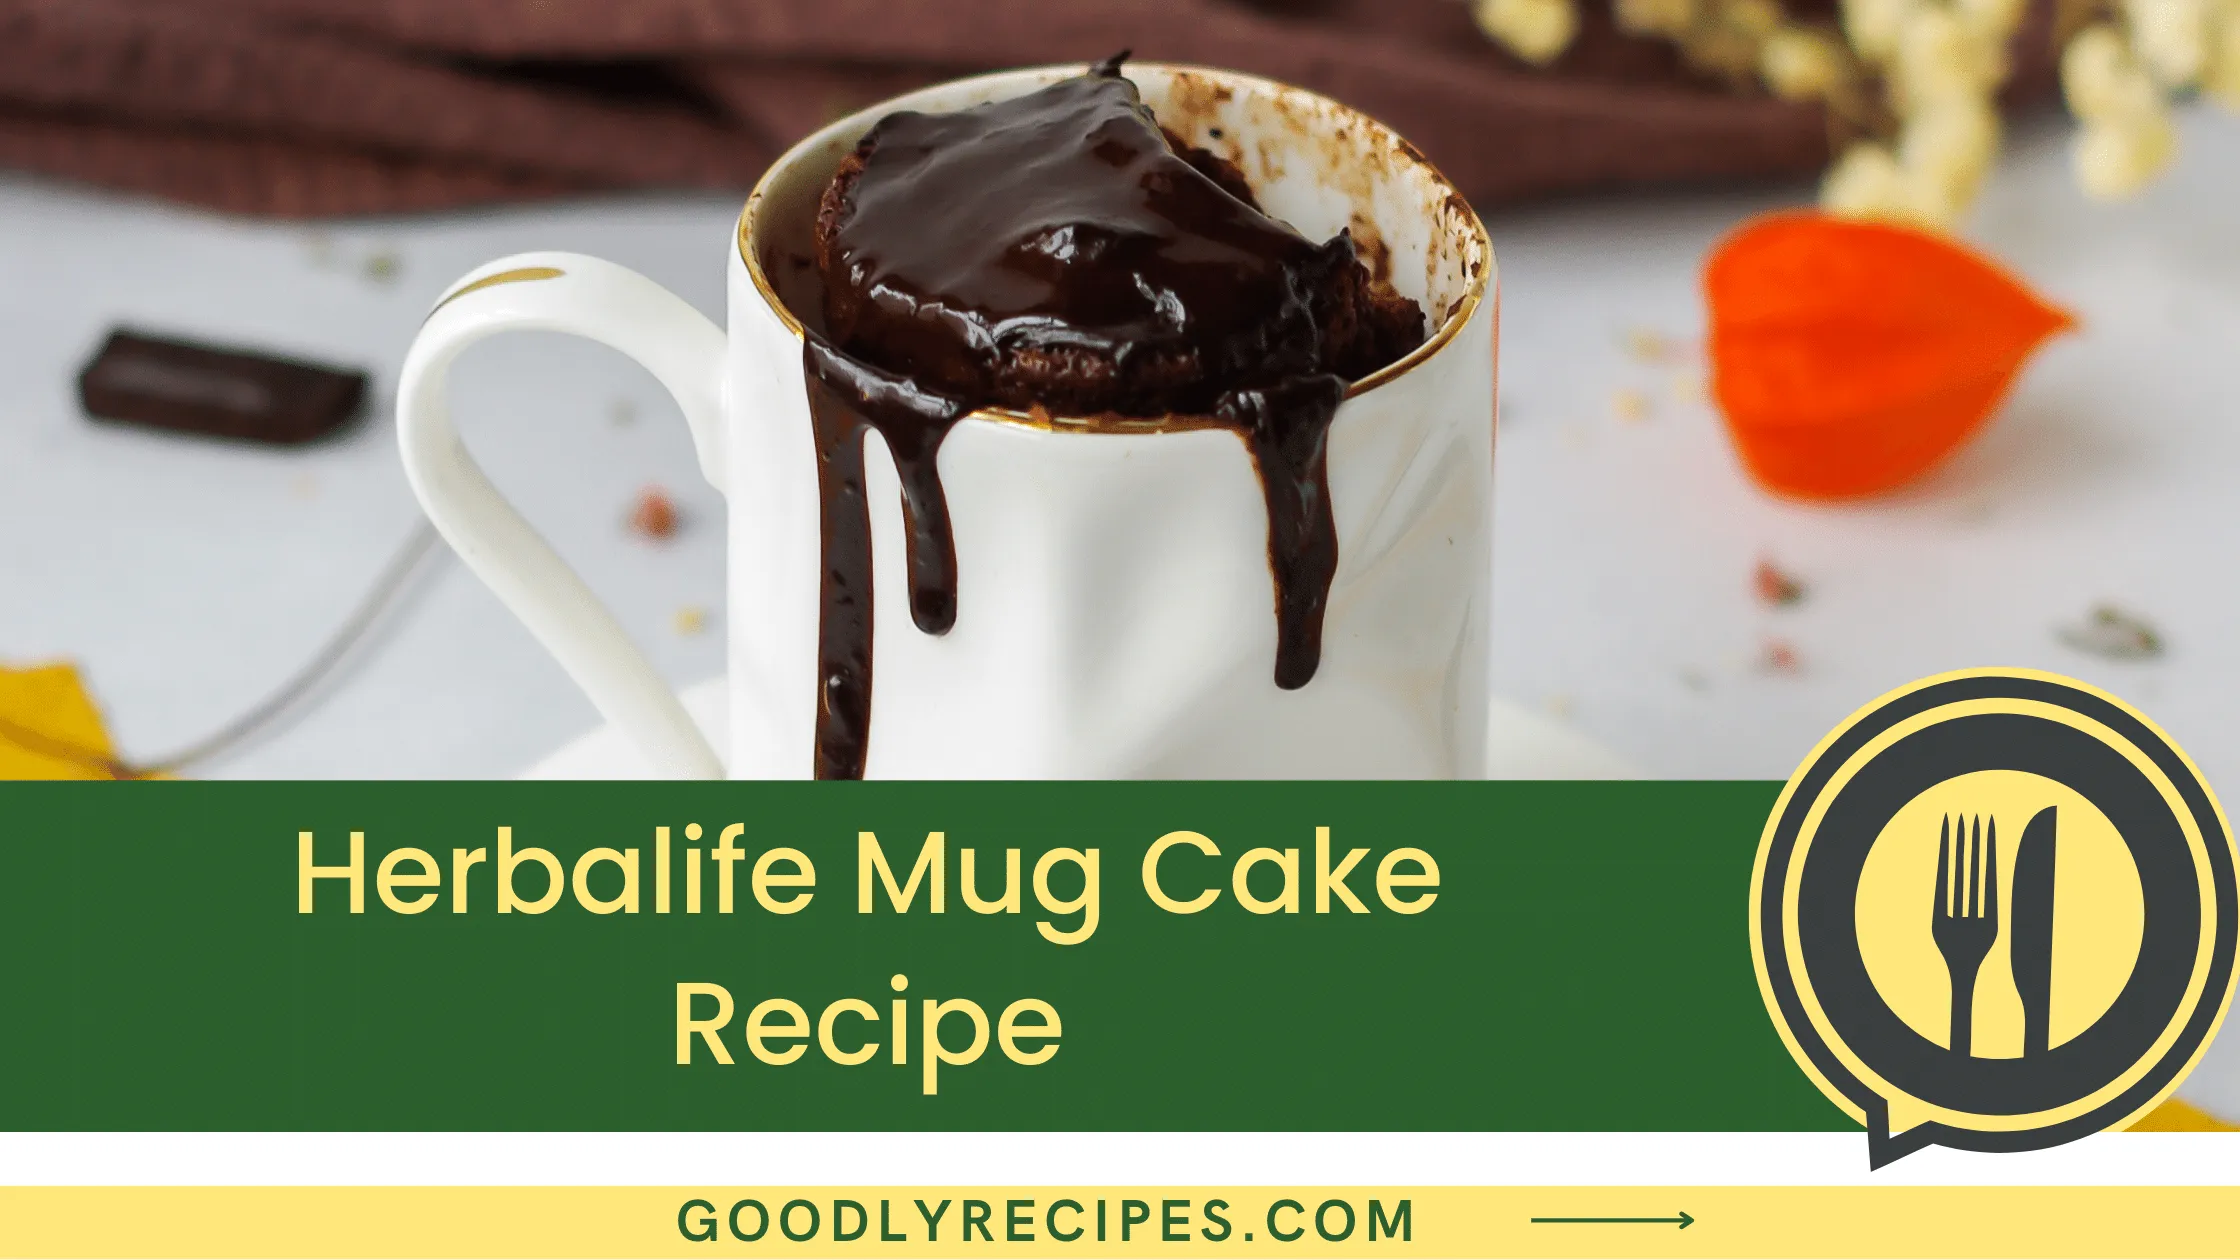 Herbalife Mug Cake Recipe - For Food Lovers